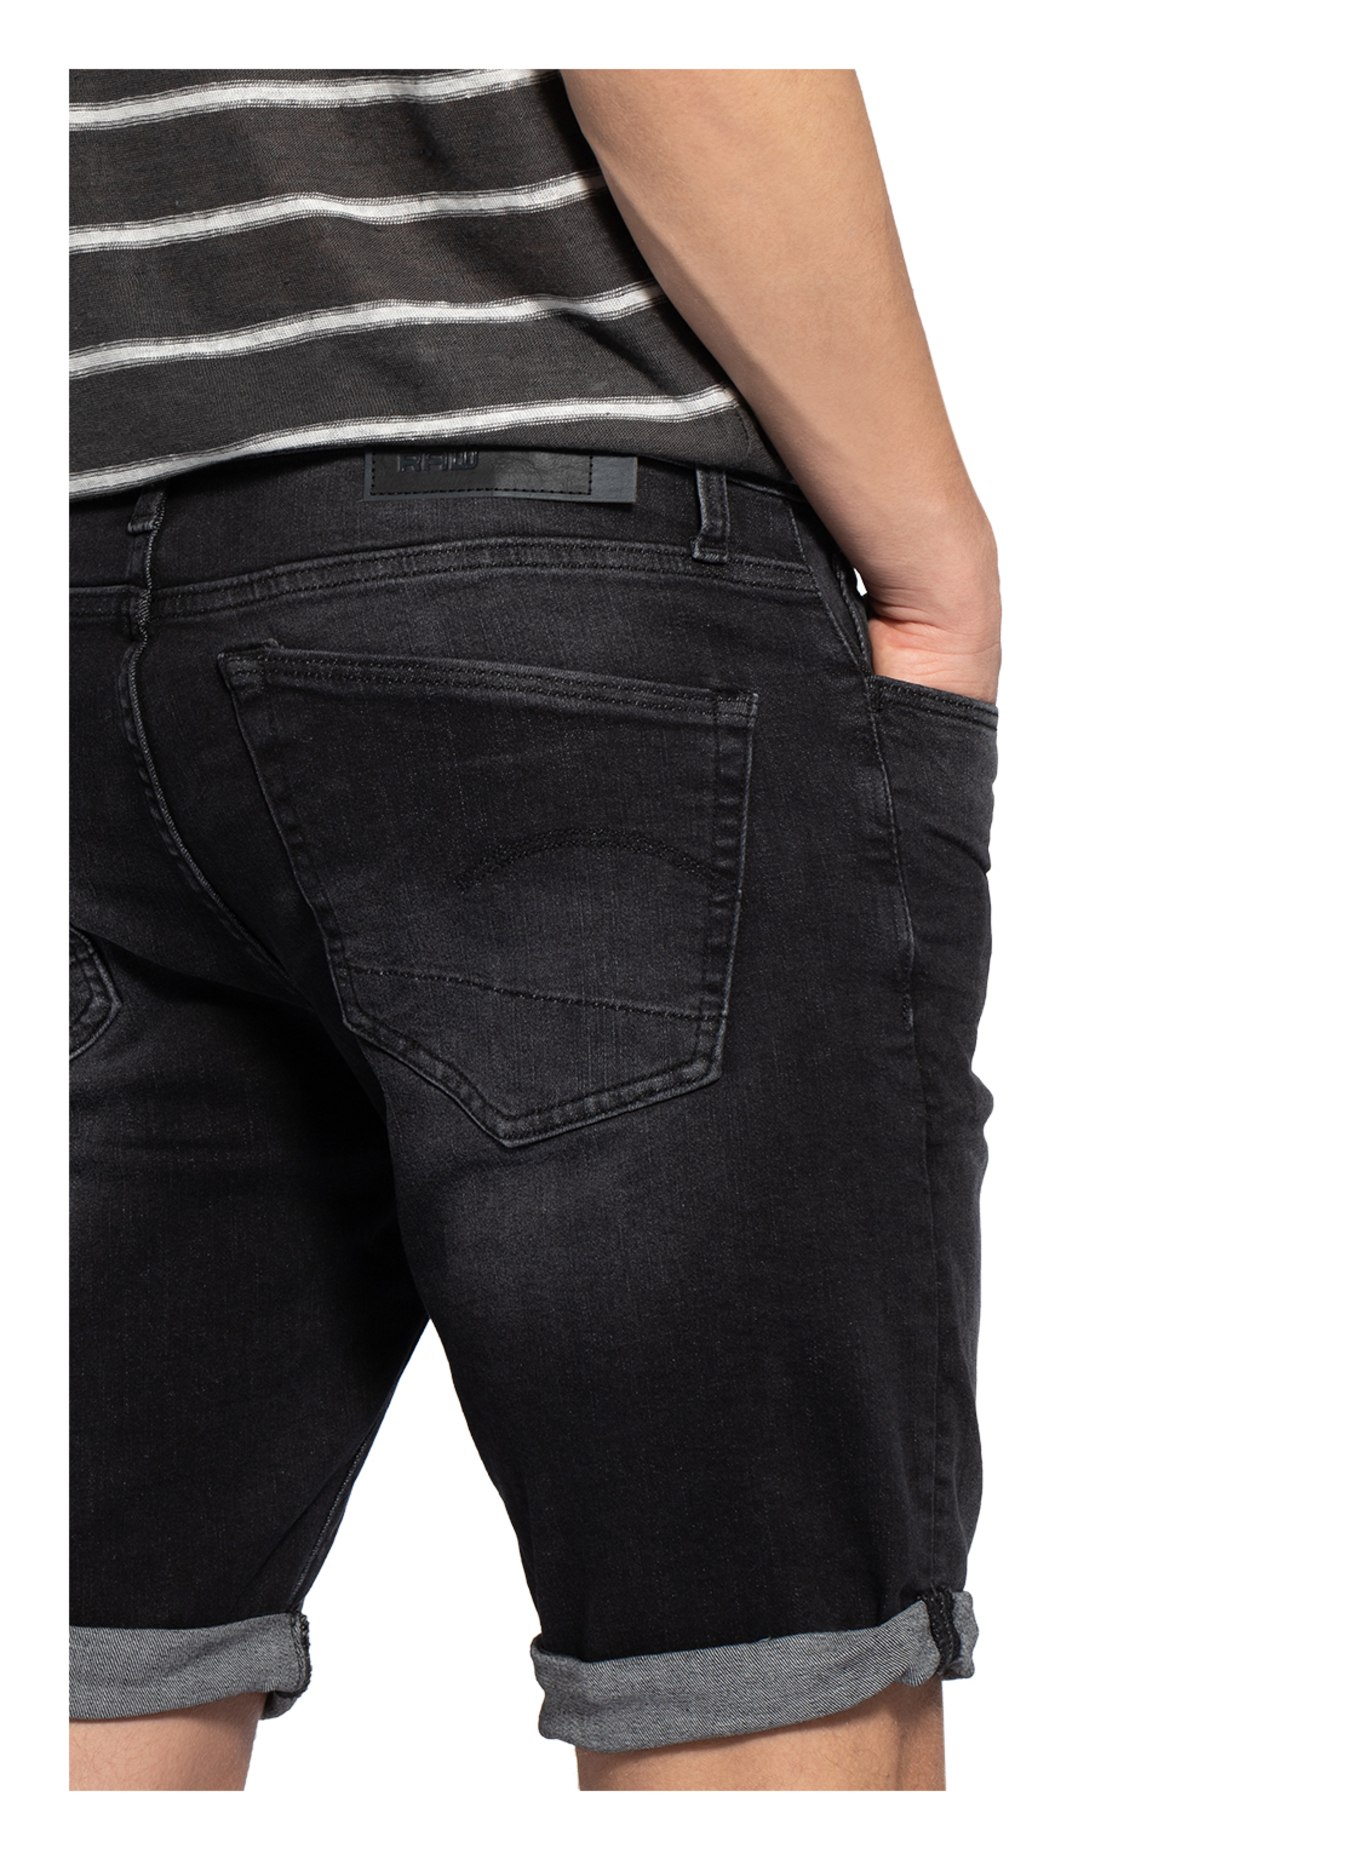 G-Star RAW Jeans-Shorts 3301 Slim Fit, Farbe: 9887 Medium Aged Grey (Bild 5)